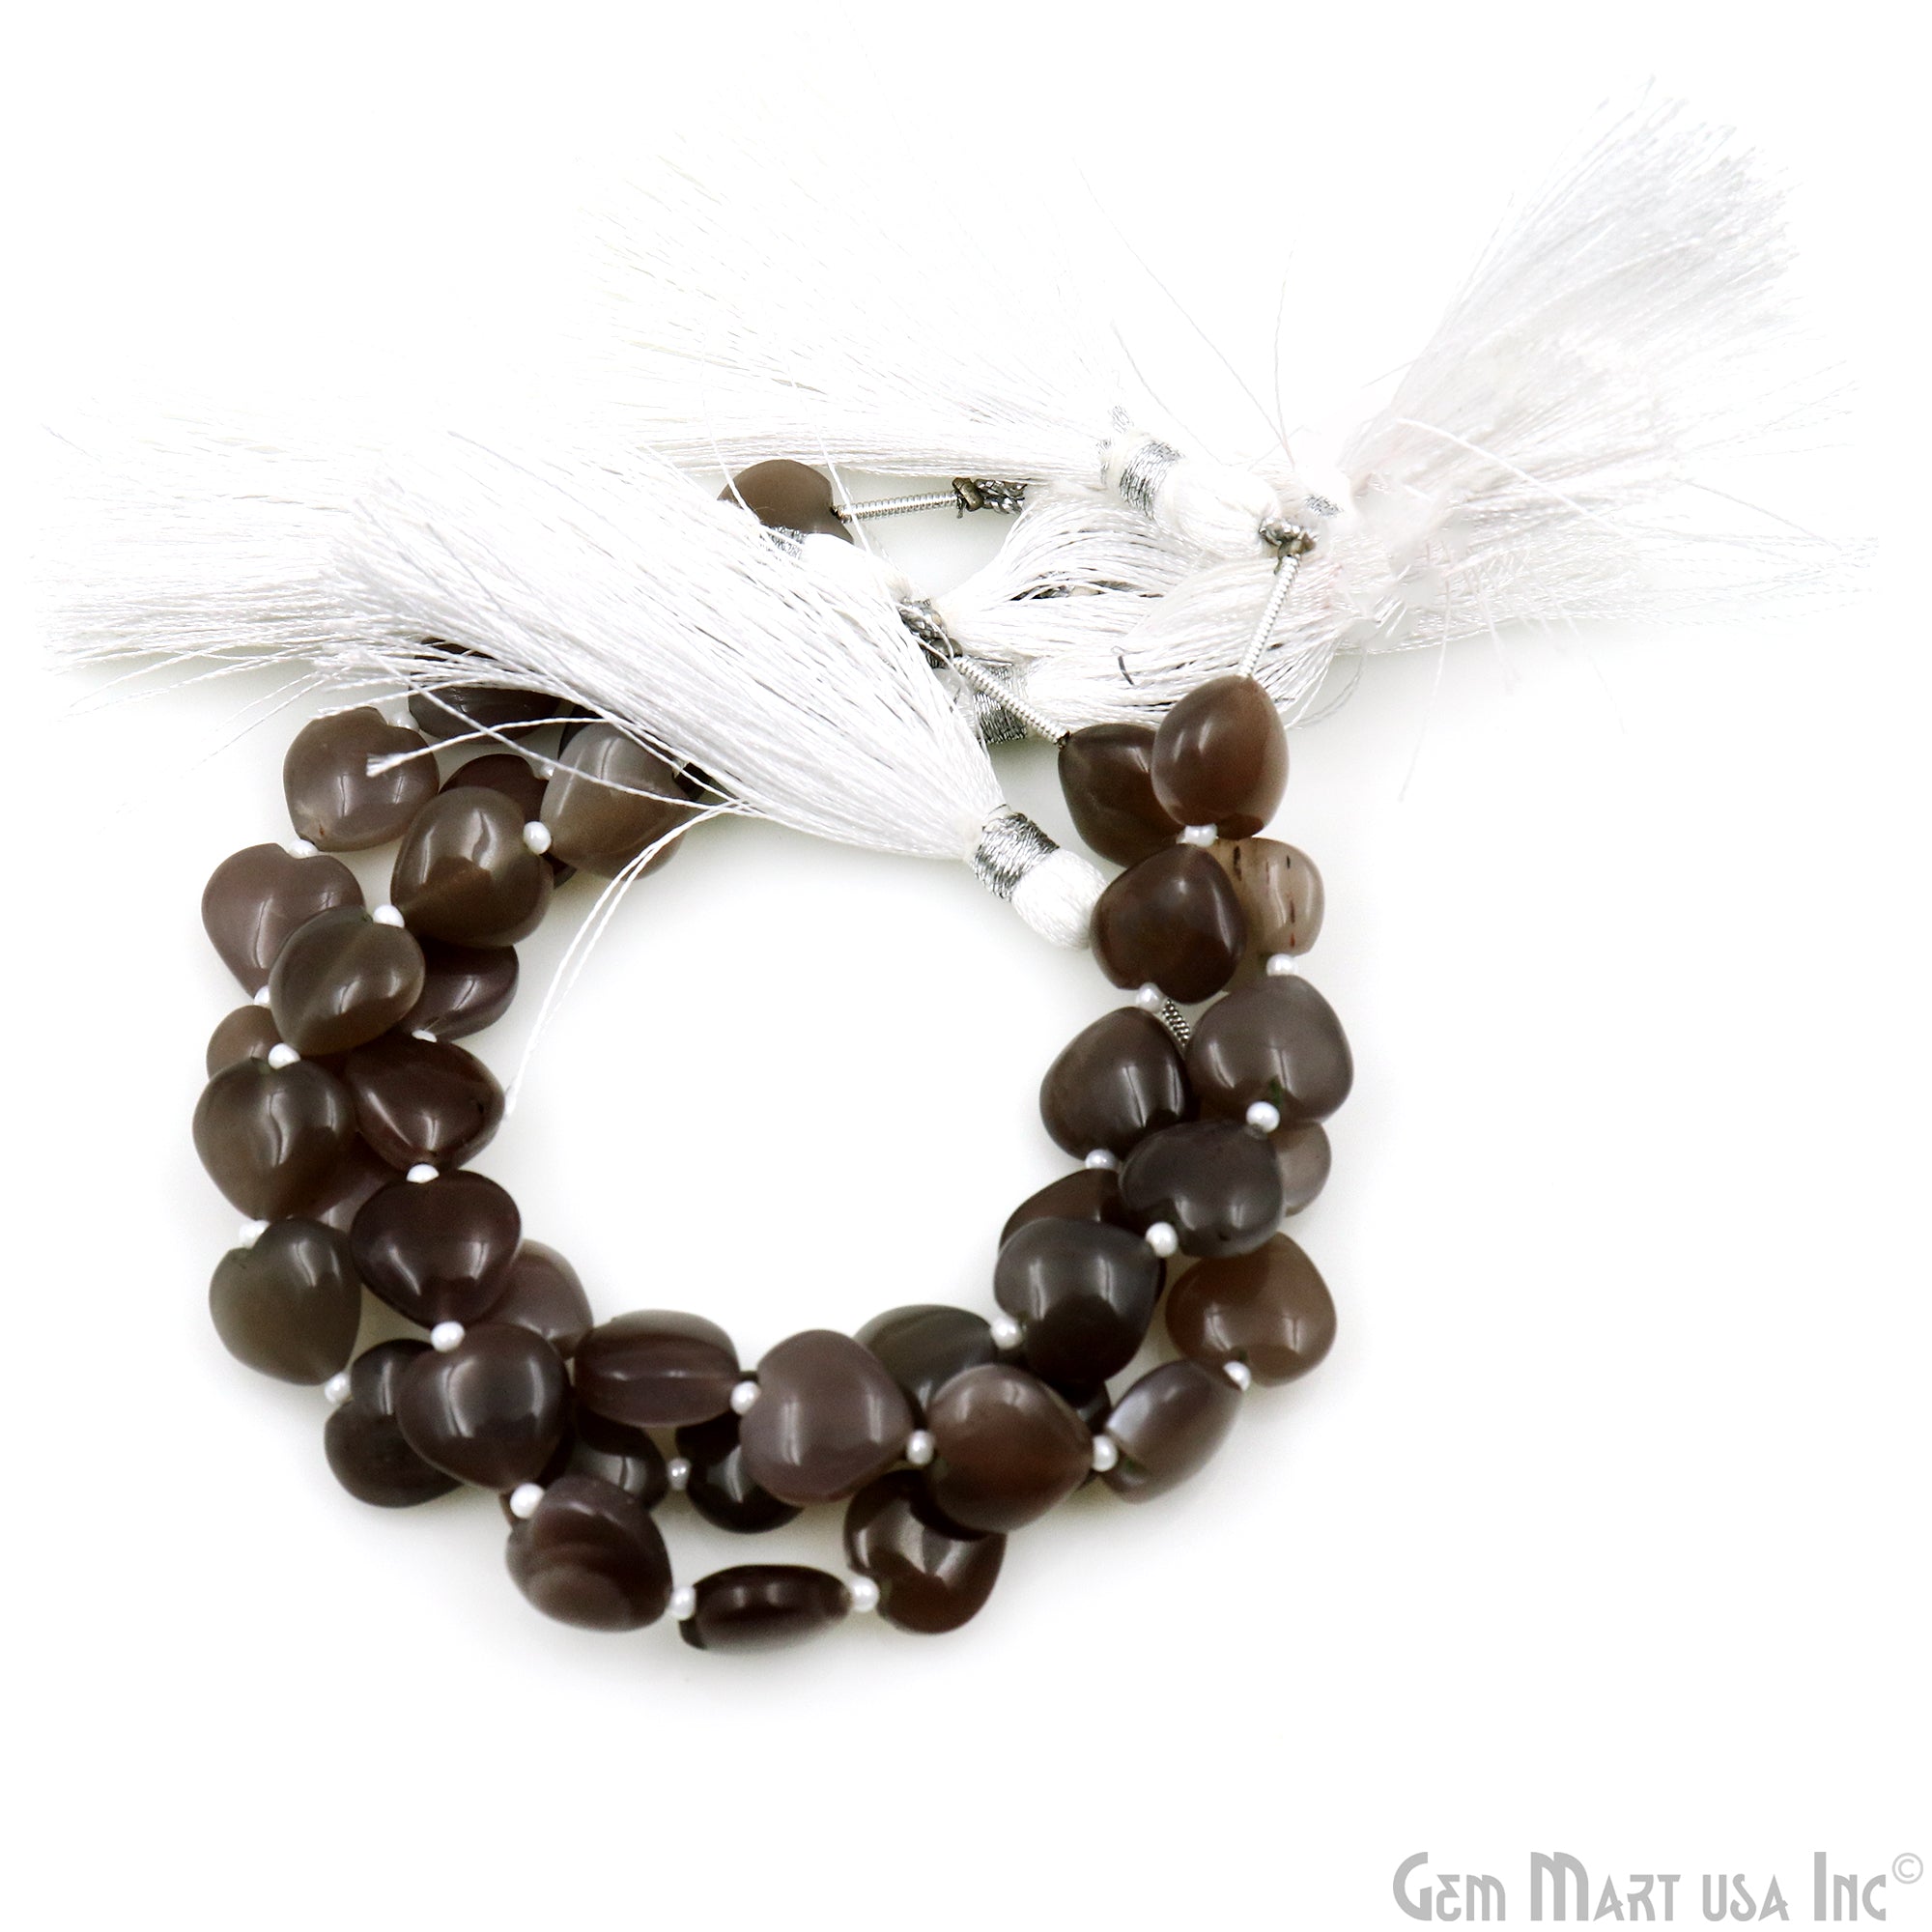 Gray Moonstone Heart Shape Cabochon Beads 10mm Gemstone 7 Inch Strands Briolette Drops